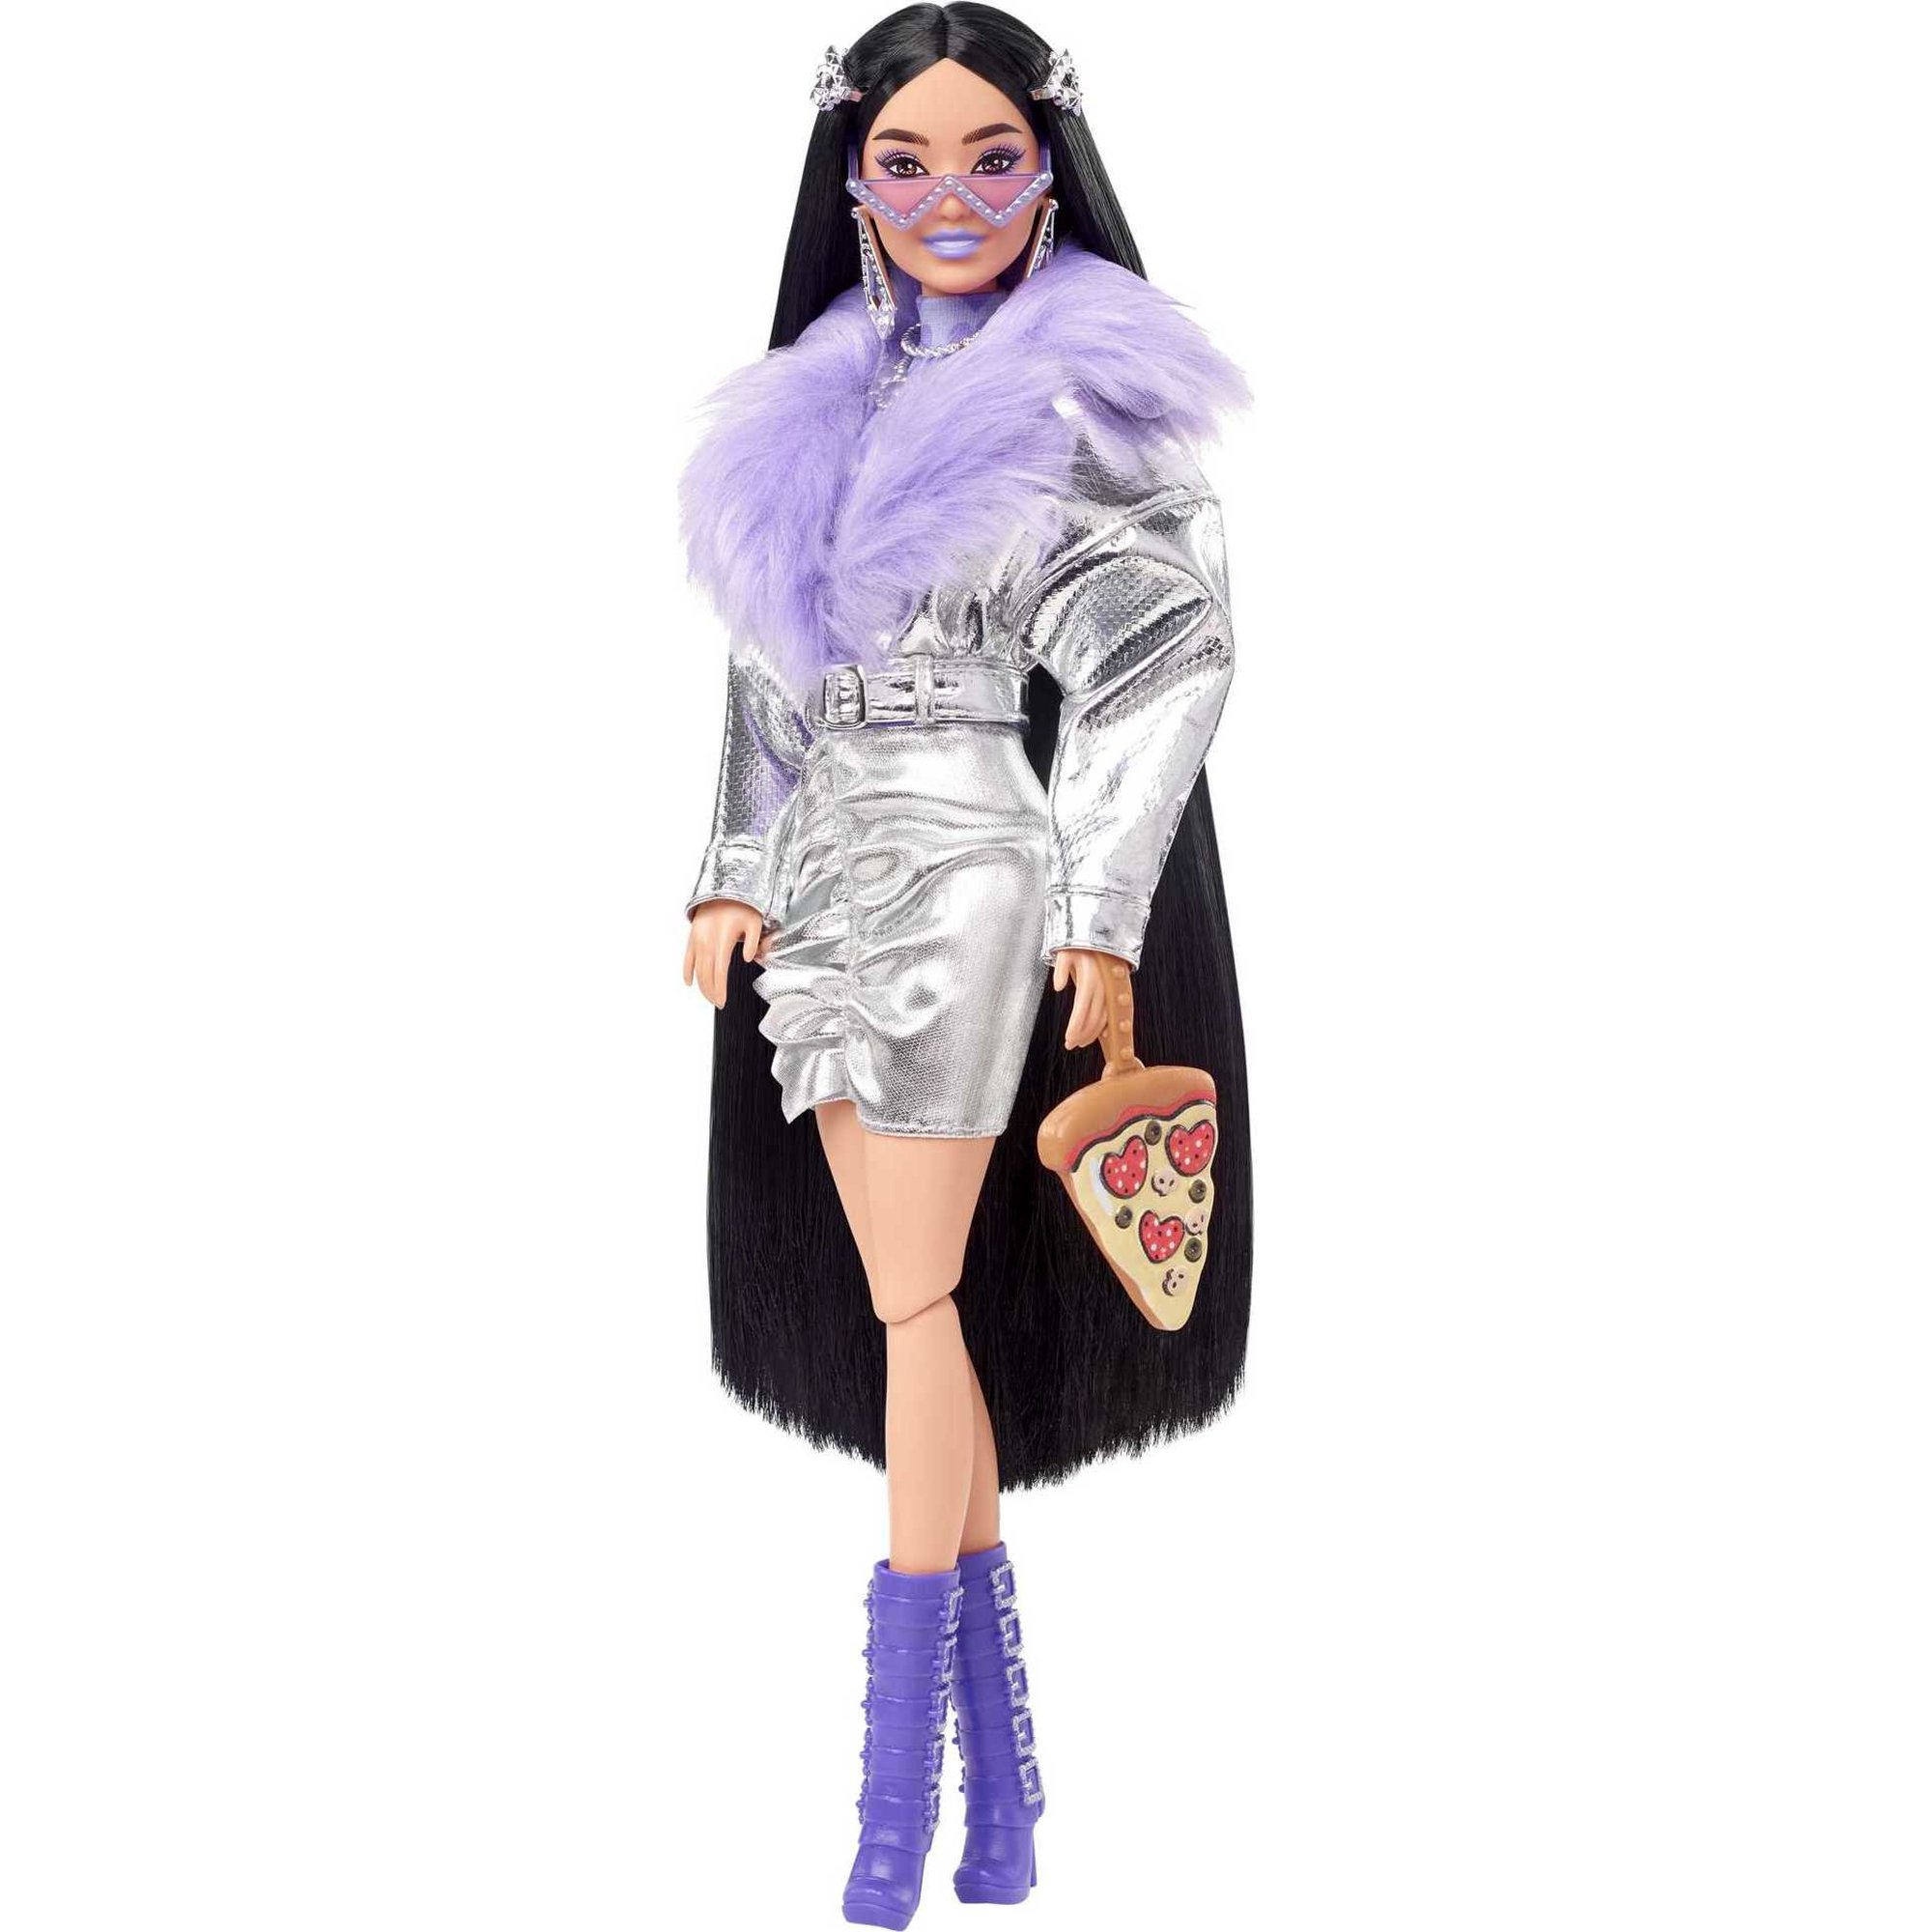 Barbie Extra Fashion Doll with Black Hair, Metallic Silver Jacket & Pet Dog #15